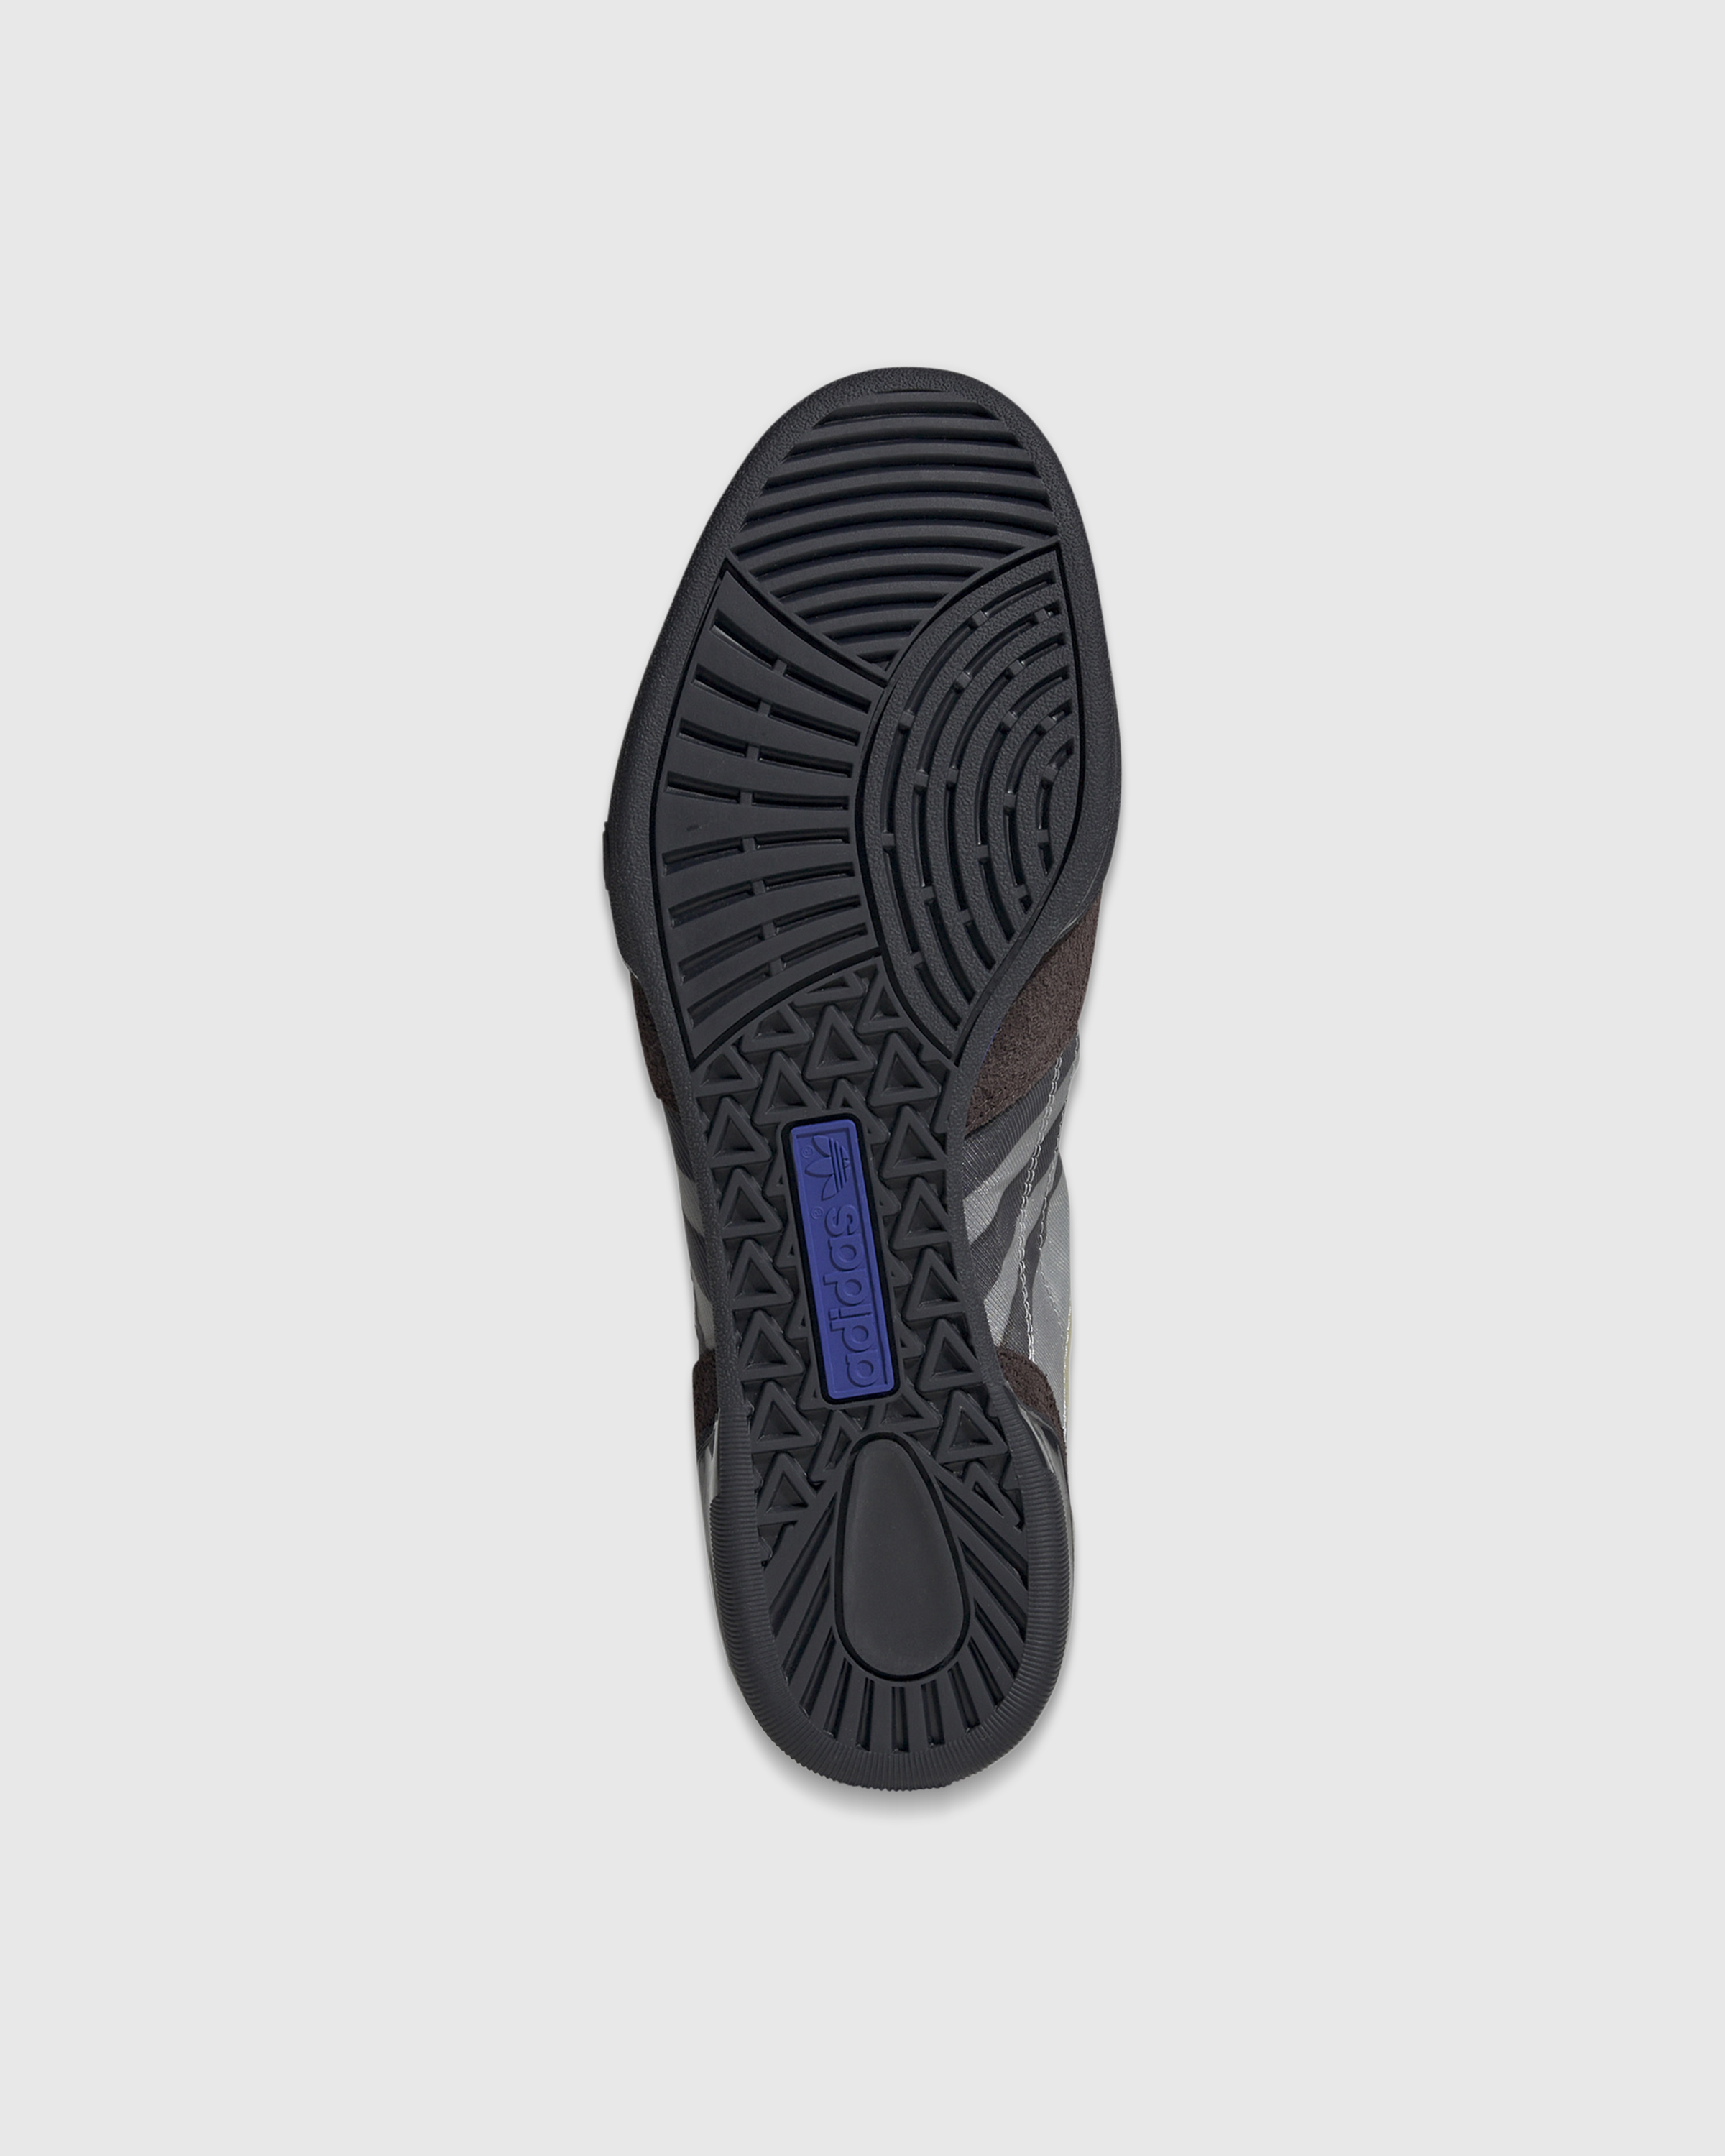 Adidas x Craig Green – Squash Polta Akh Multi/Core White/Gum - Low Top Sneakers - Multi - Image 6